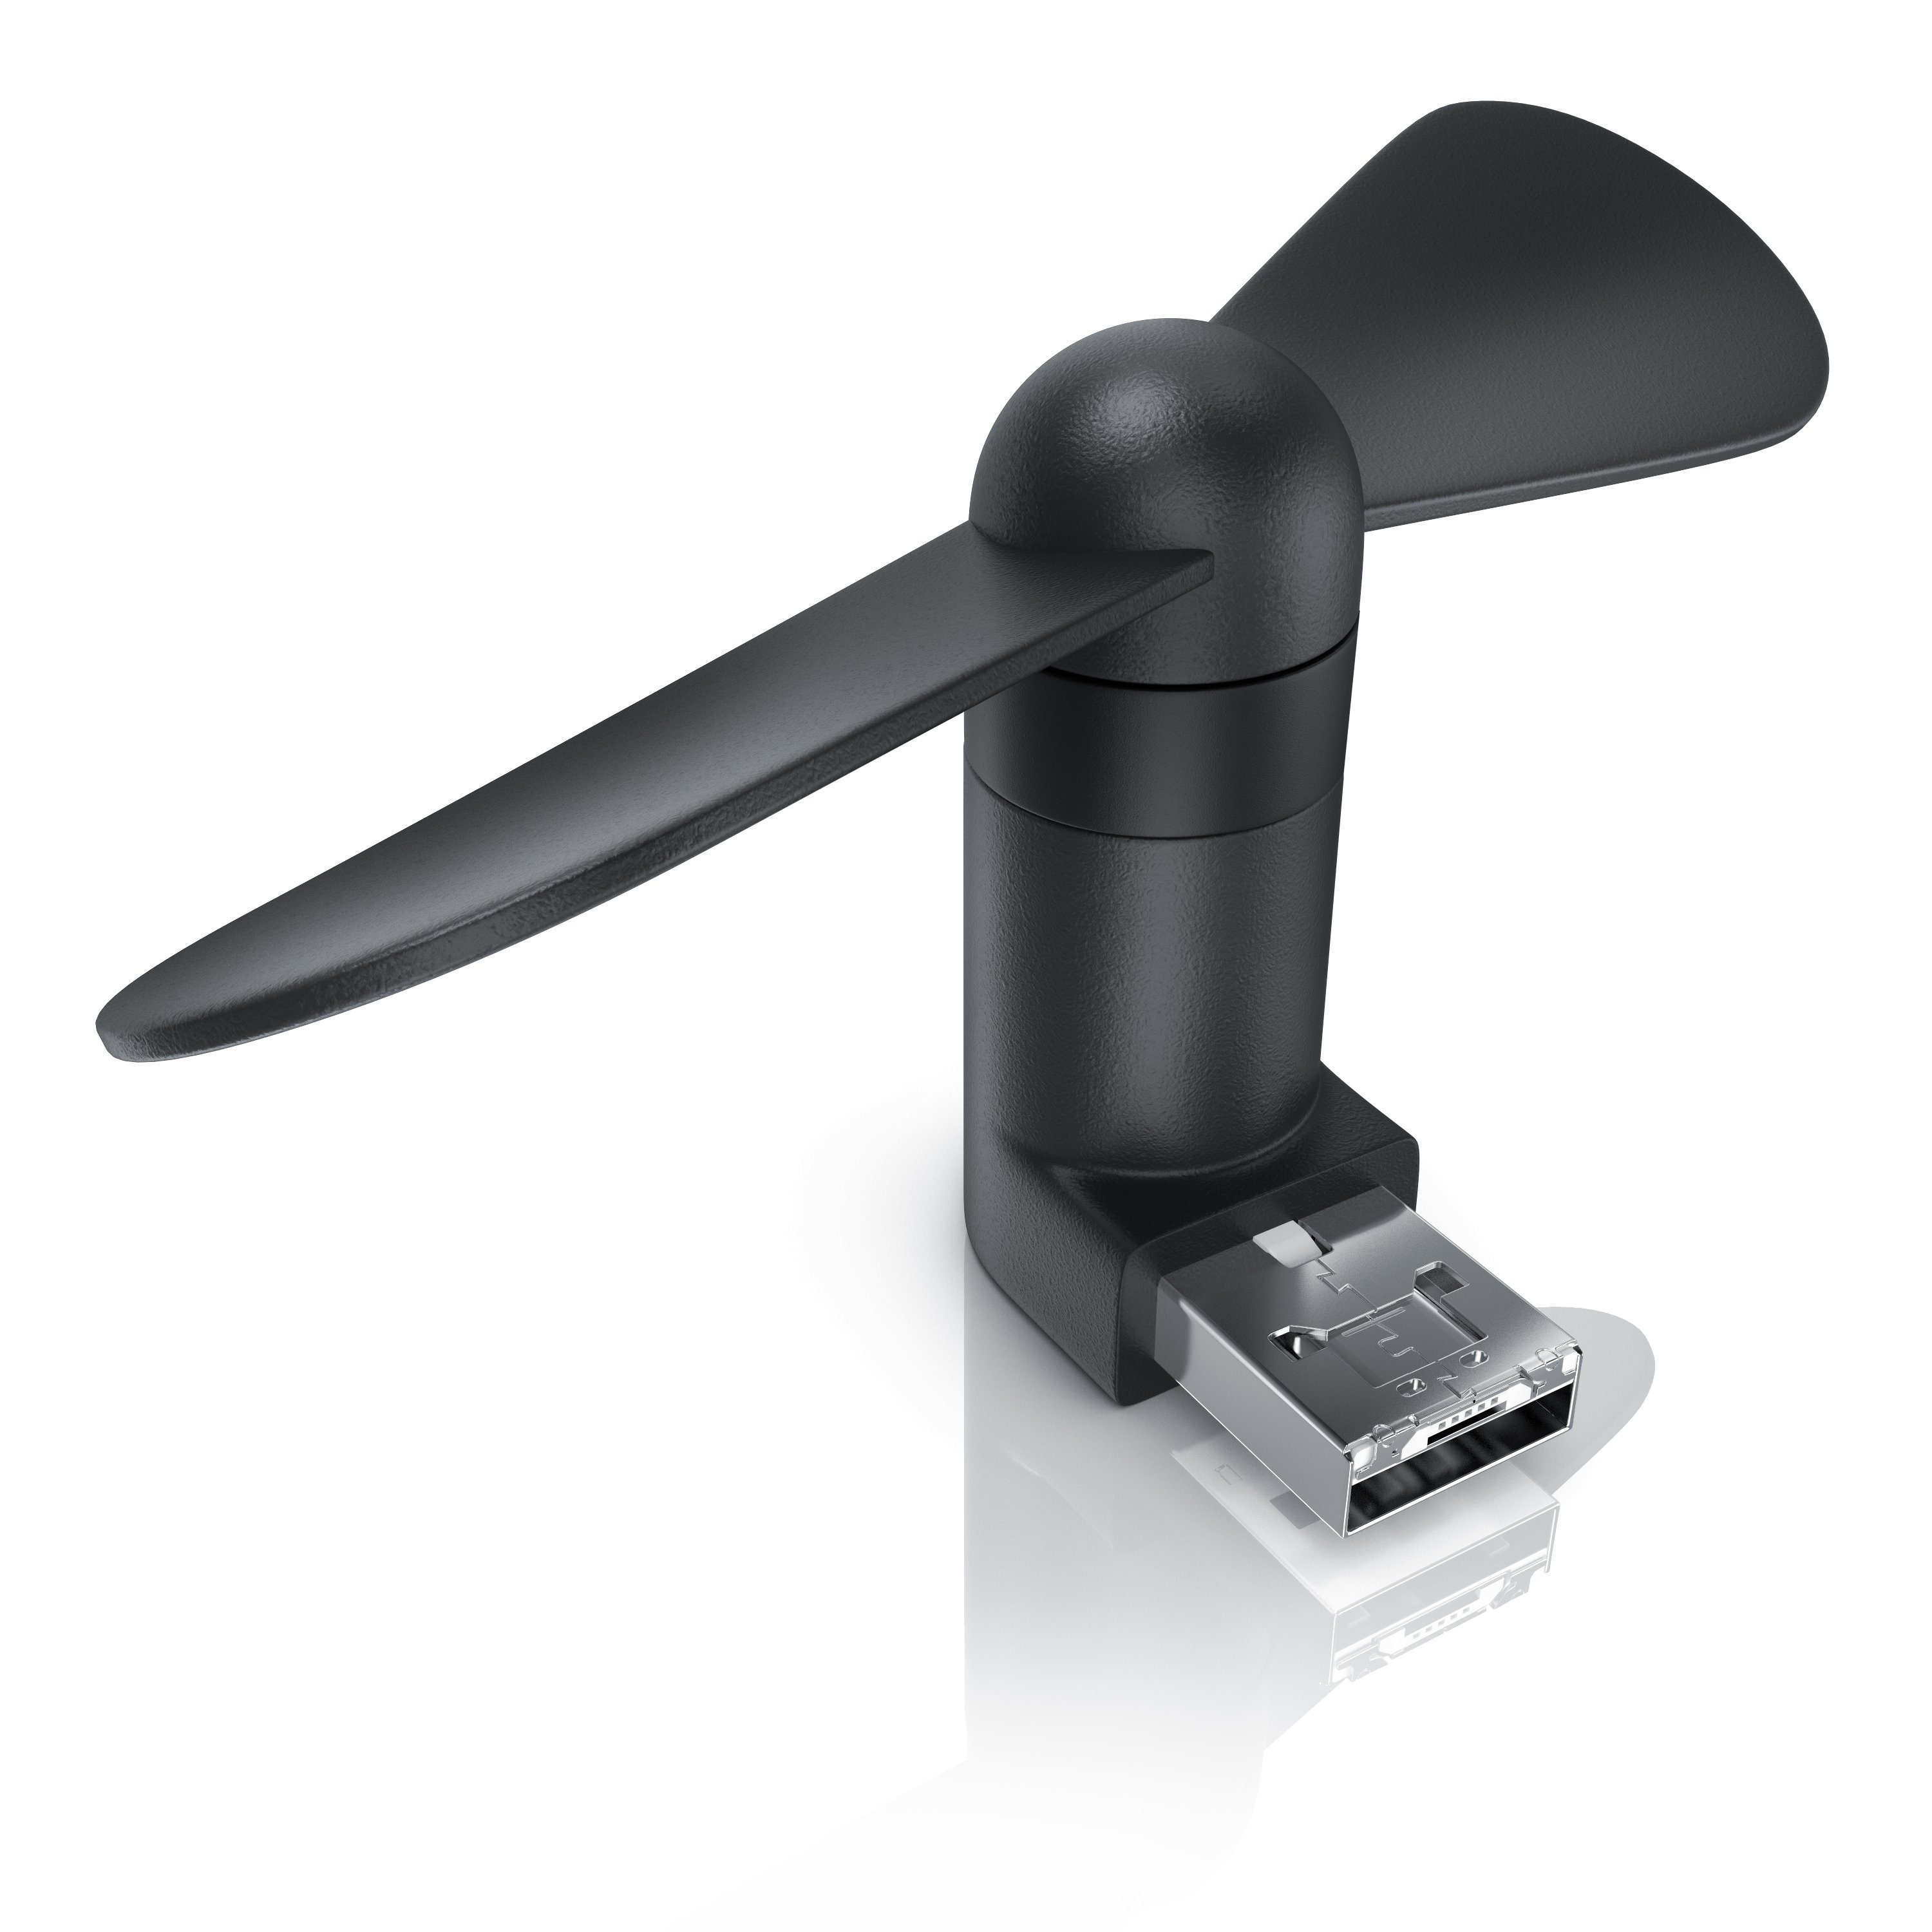 Aplic Mini USB-Ventilator, für Handy, Smartphone, Powerbank, PC etc. USB & microUSB Anschluss schwarz